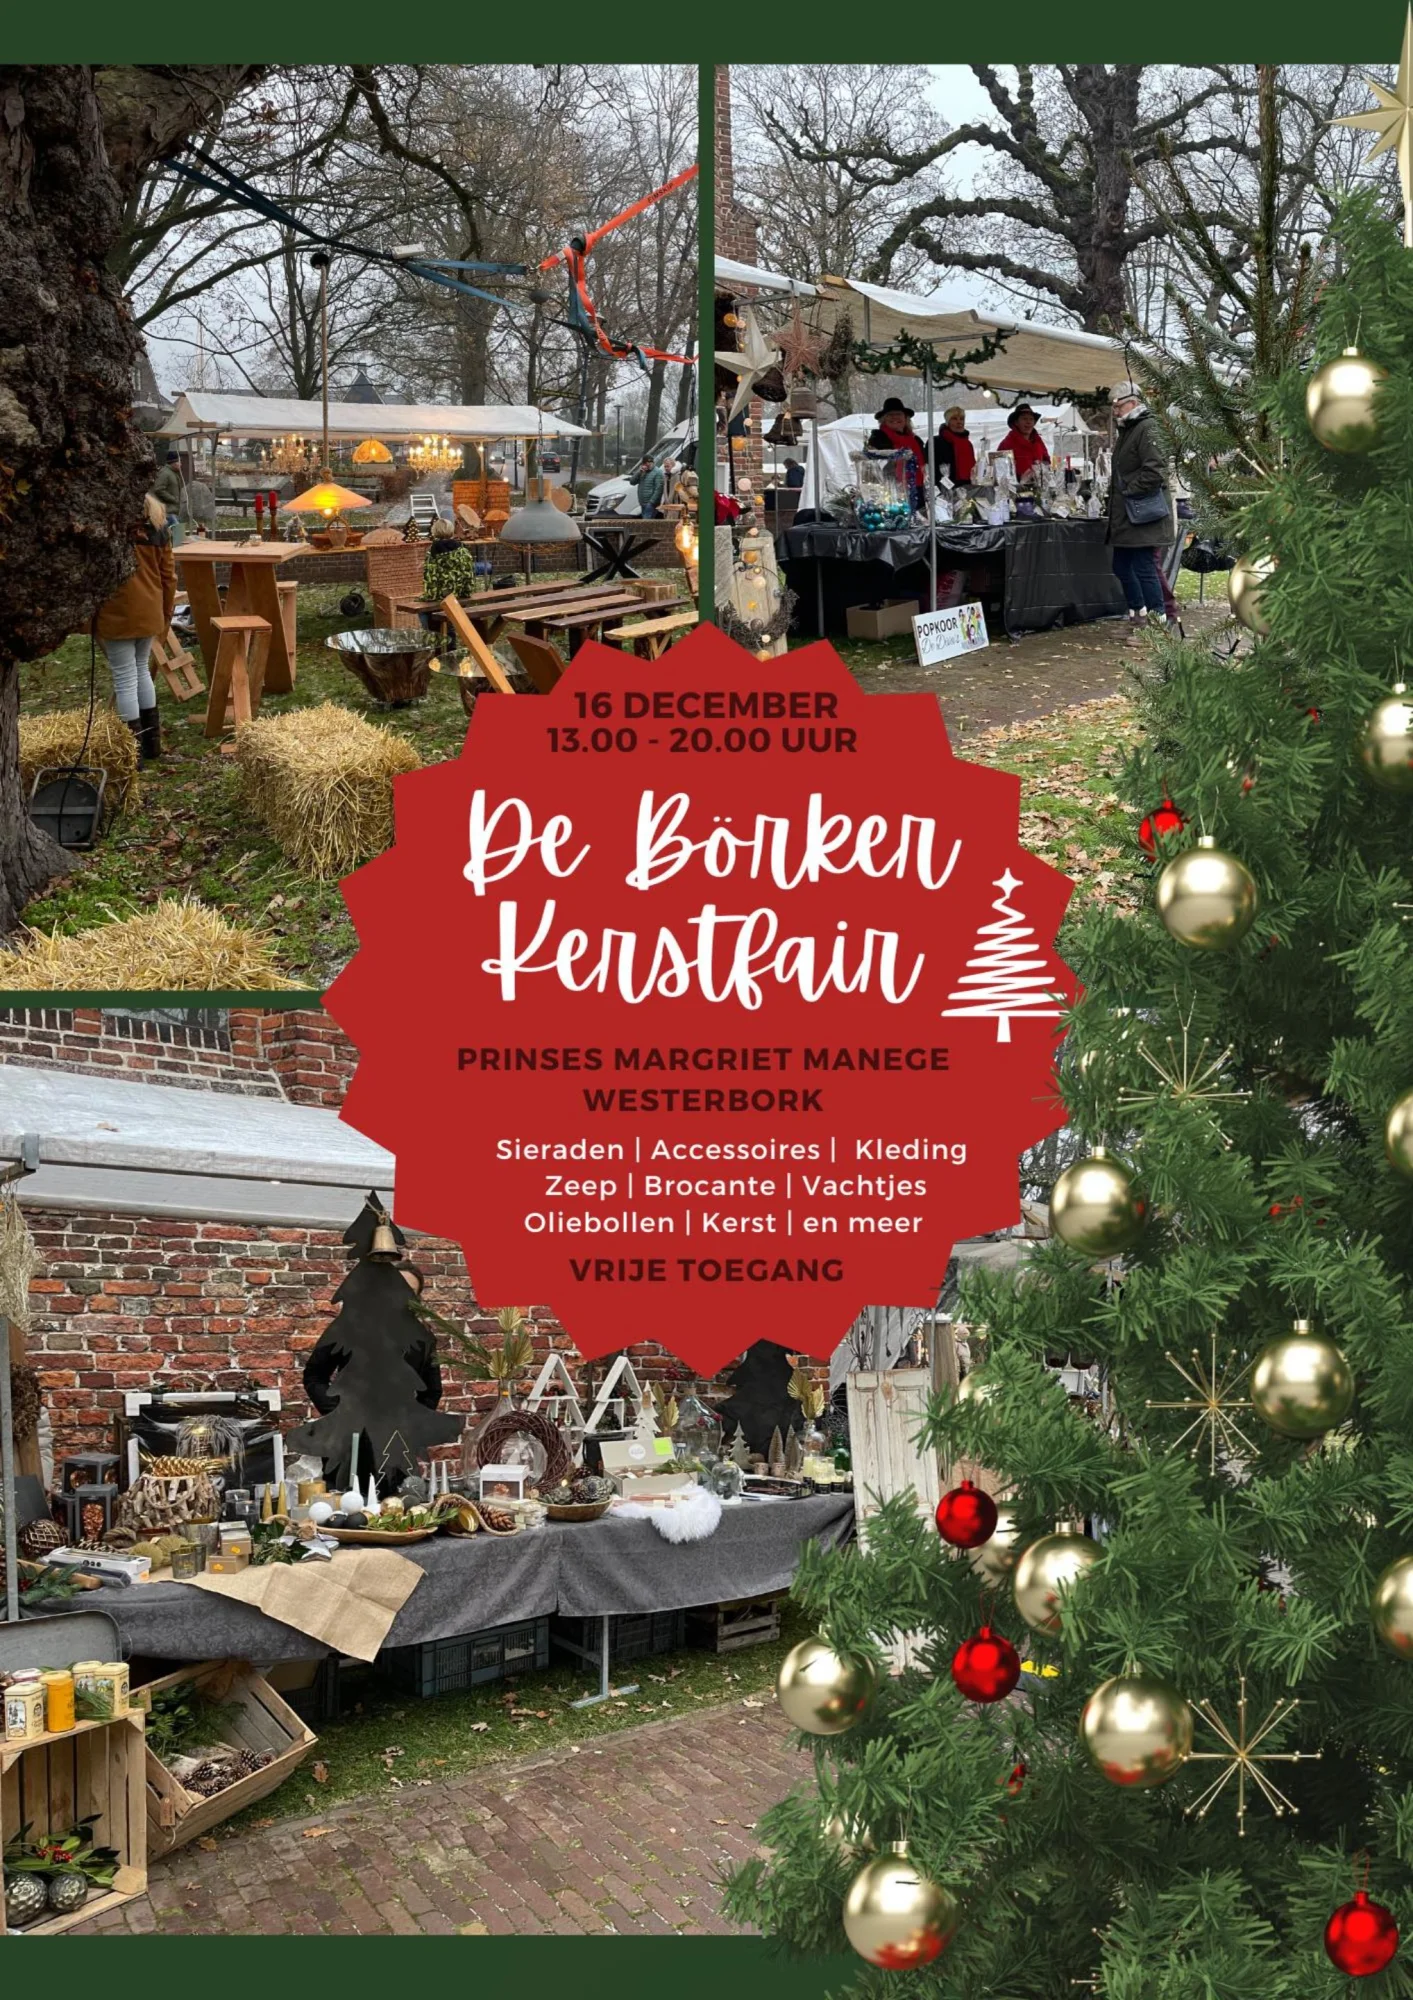 Börker Kerst Fair in Westerbork bij de Prinses Margriet Manege